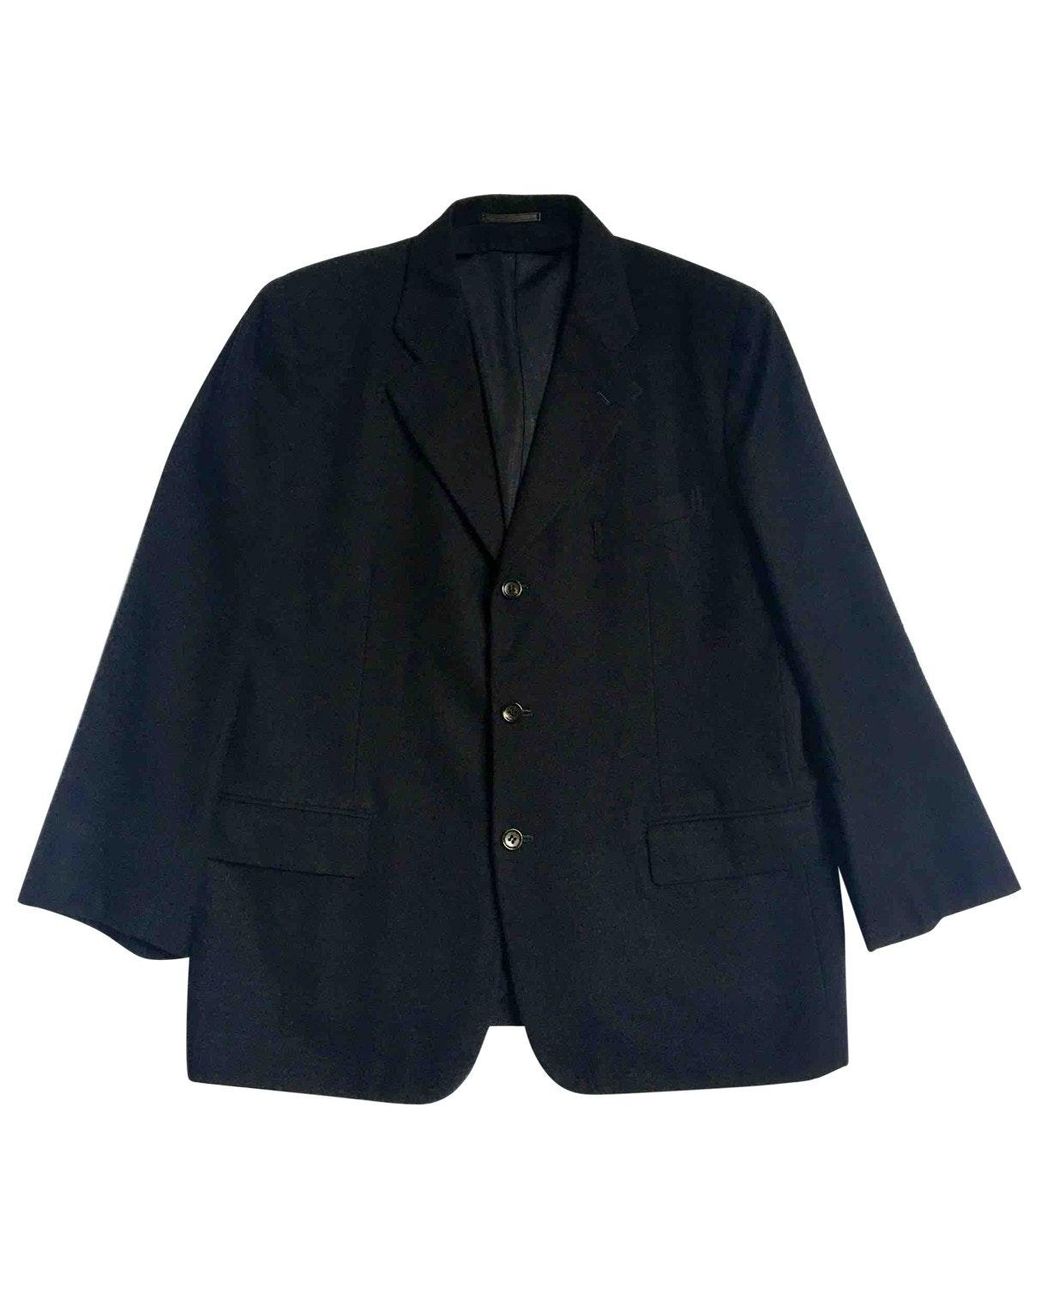 Comme des Garçons Blue Wool Jacket for Men - Lyst